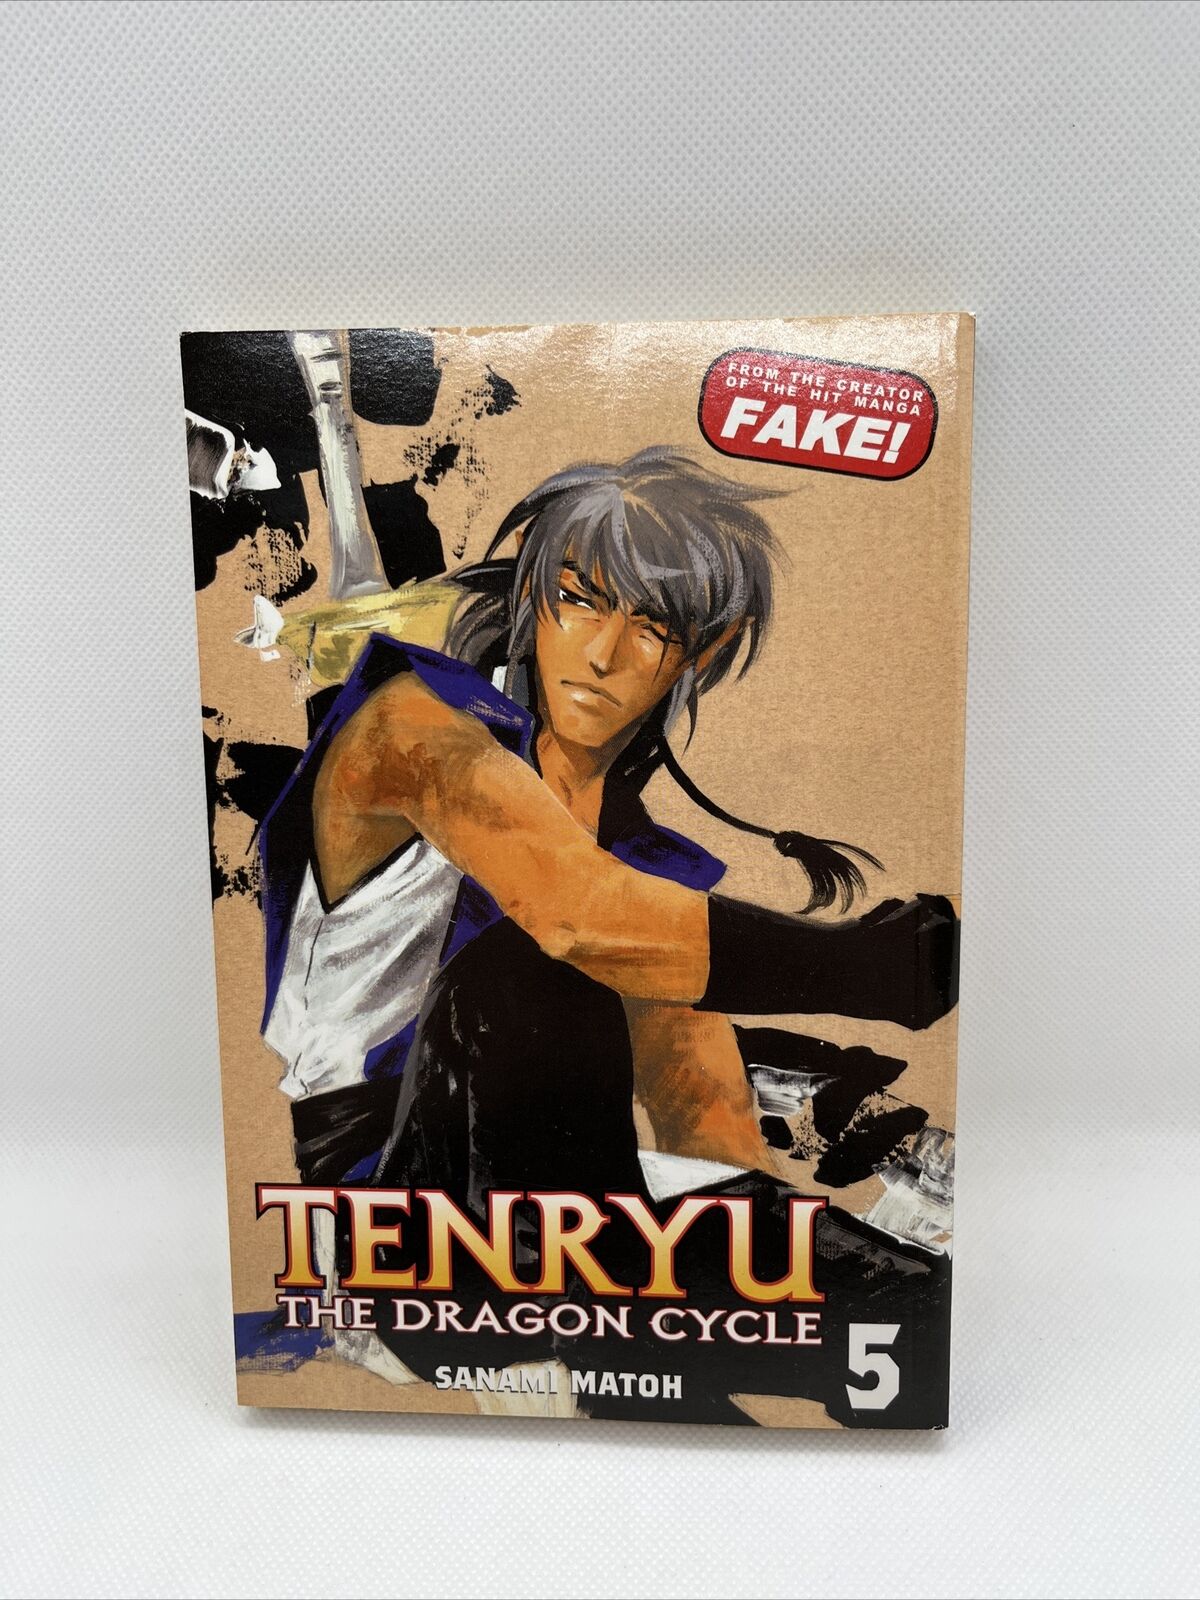 TENRYU THE DRAGON CYCLE VOLUME 5 English Manga by SANAMI MATOH 